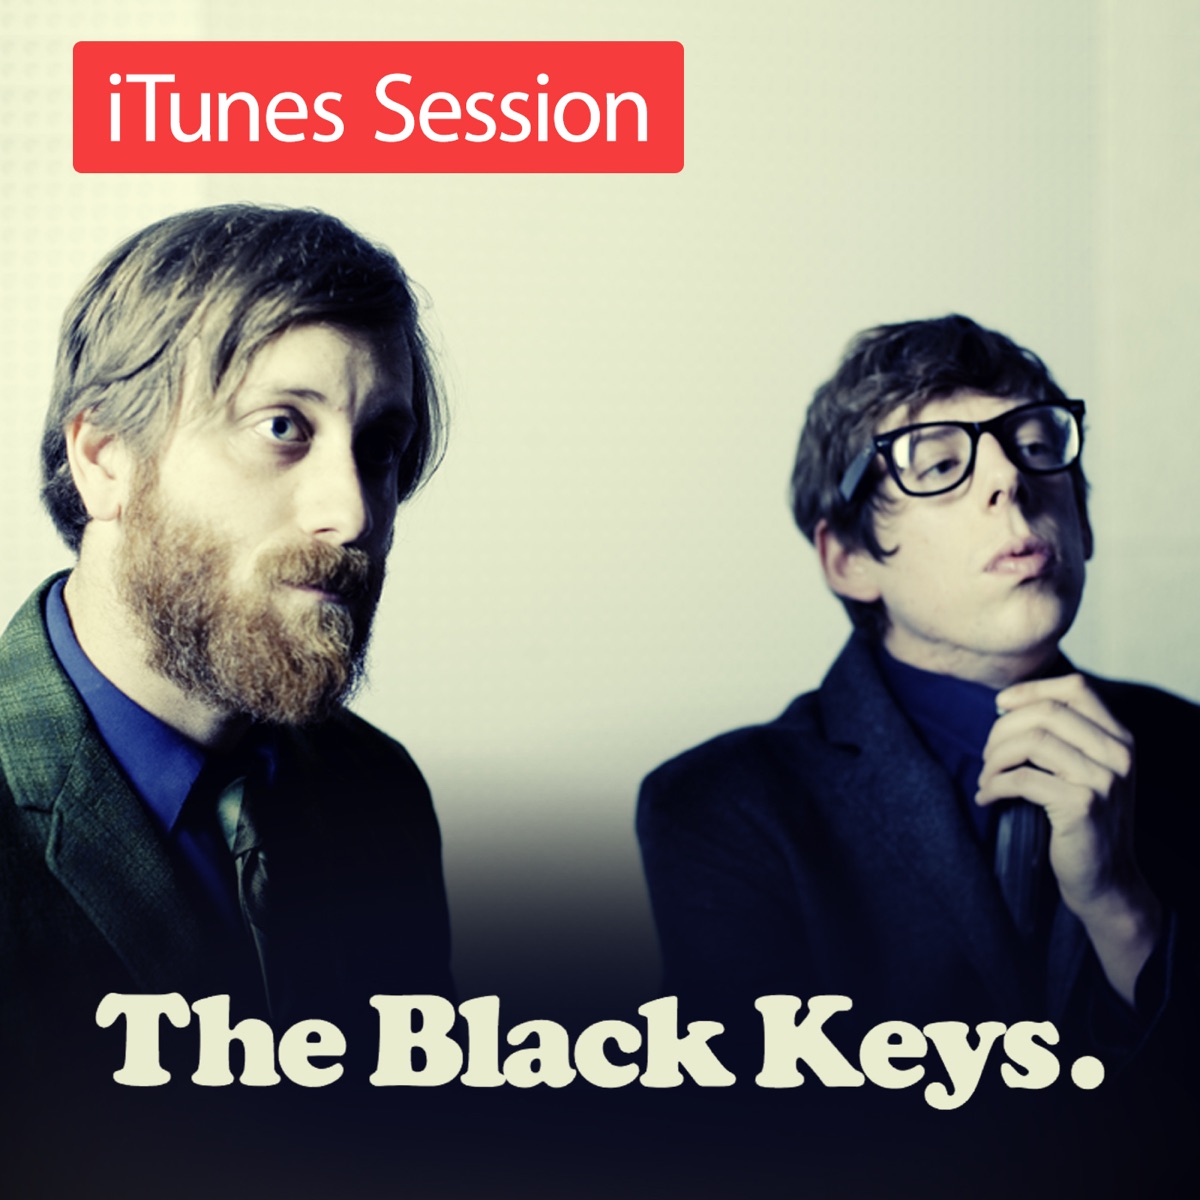 THE BLACK KEYS TURN BLUE CD/LP/DIGITAL – The Black Keys